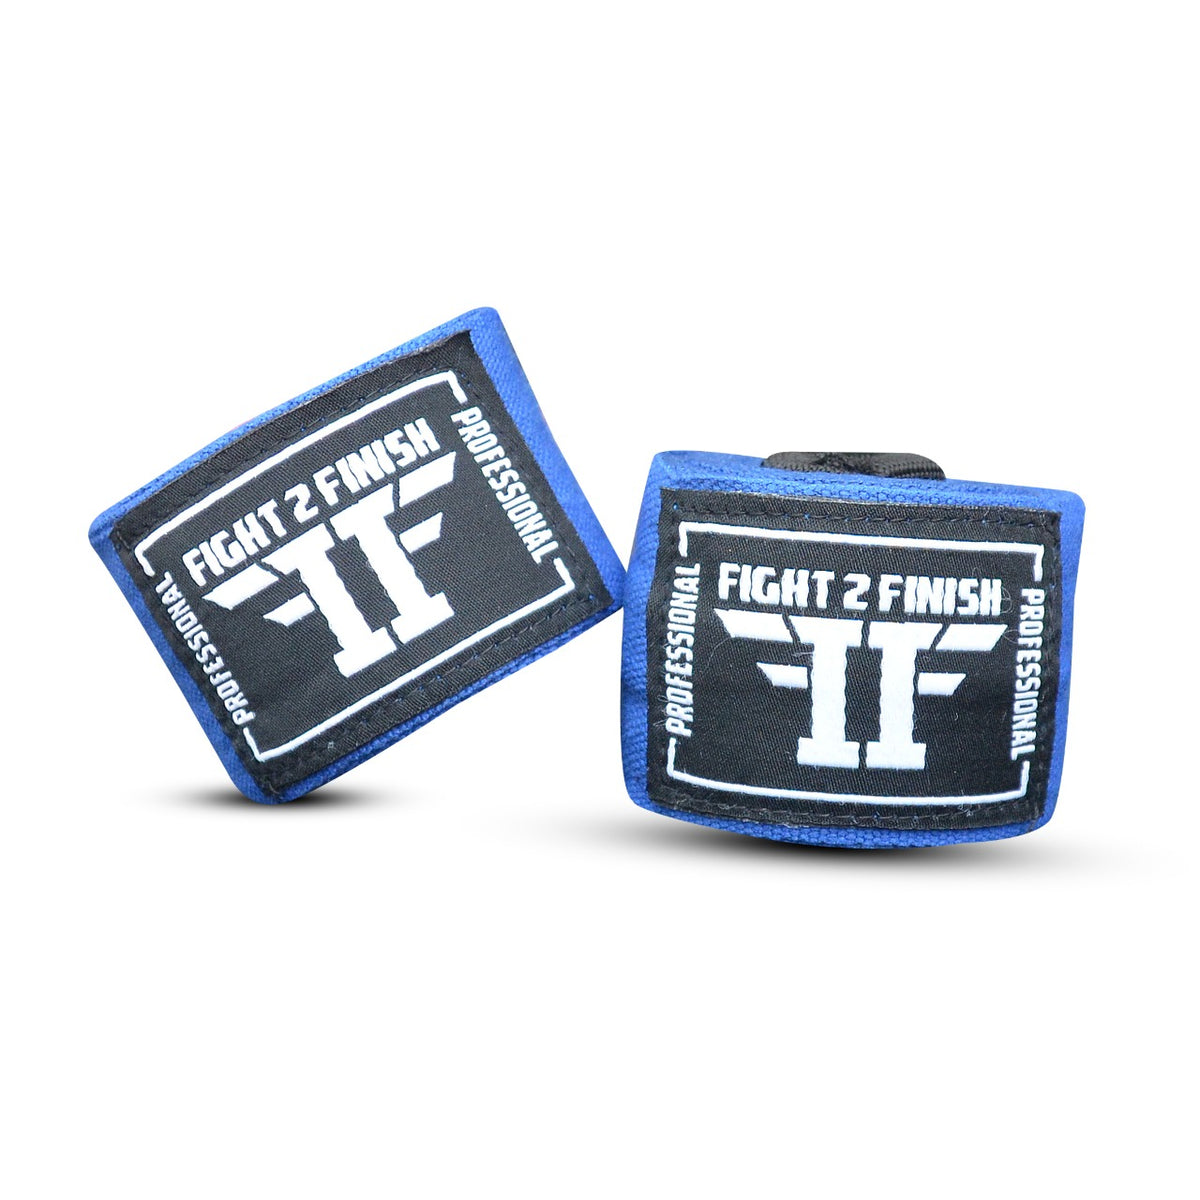 Skulltec knuckle pads – FIGHT 2 FINISH